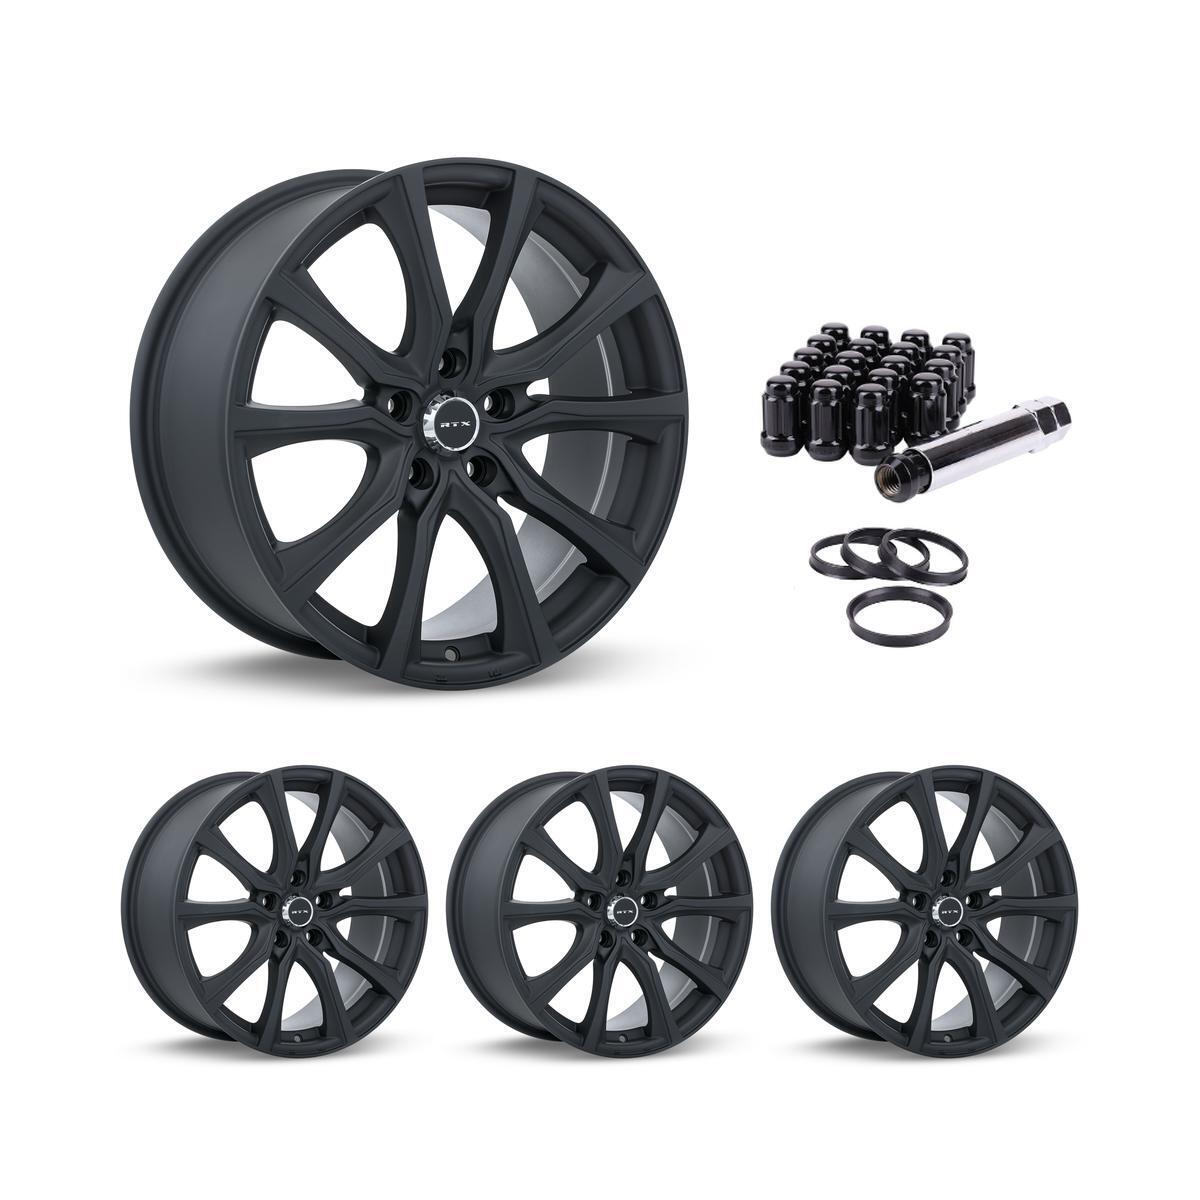 Wheel Rims Set with Black Lug Nuts Kit for 01 Hyundai XG300 P823074 15 inch